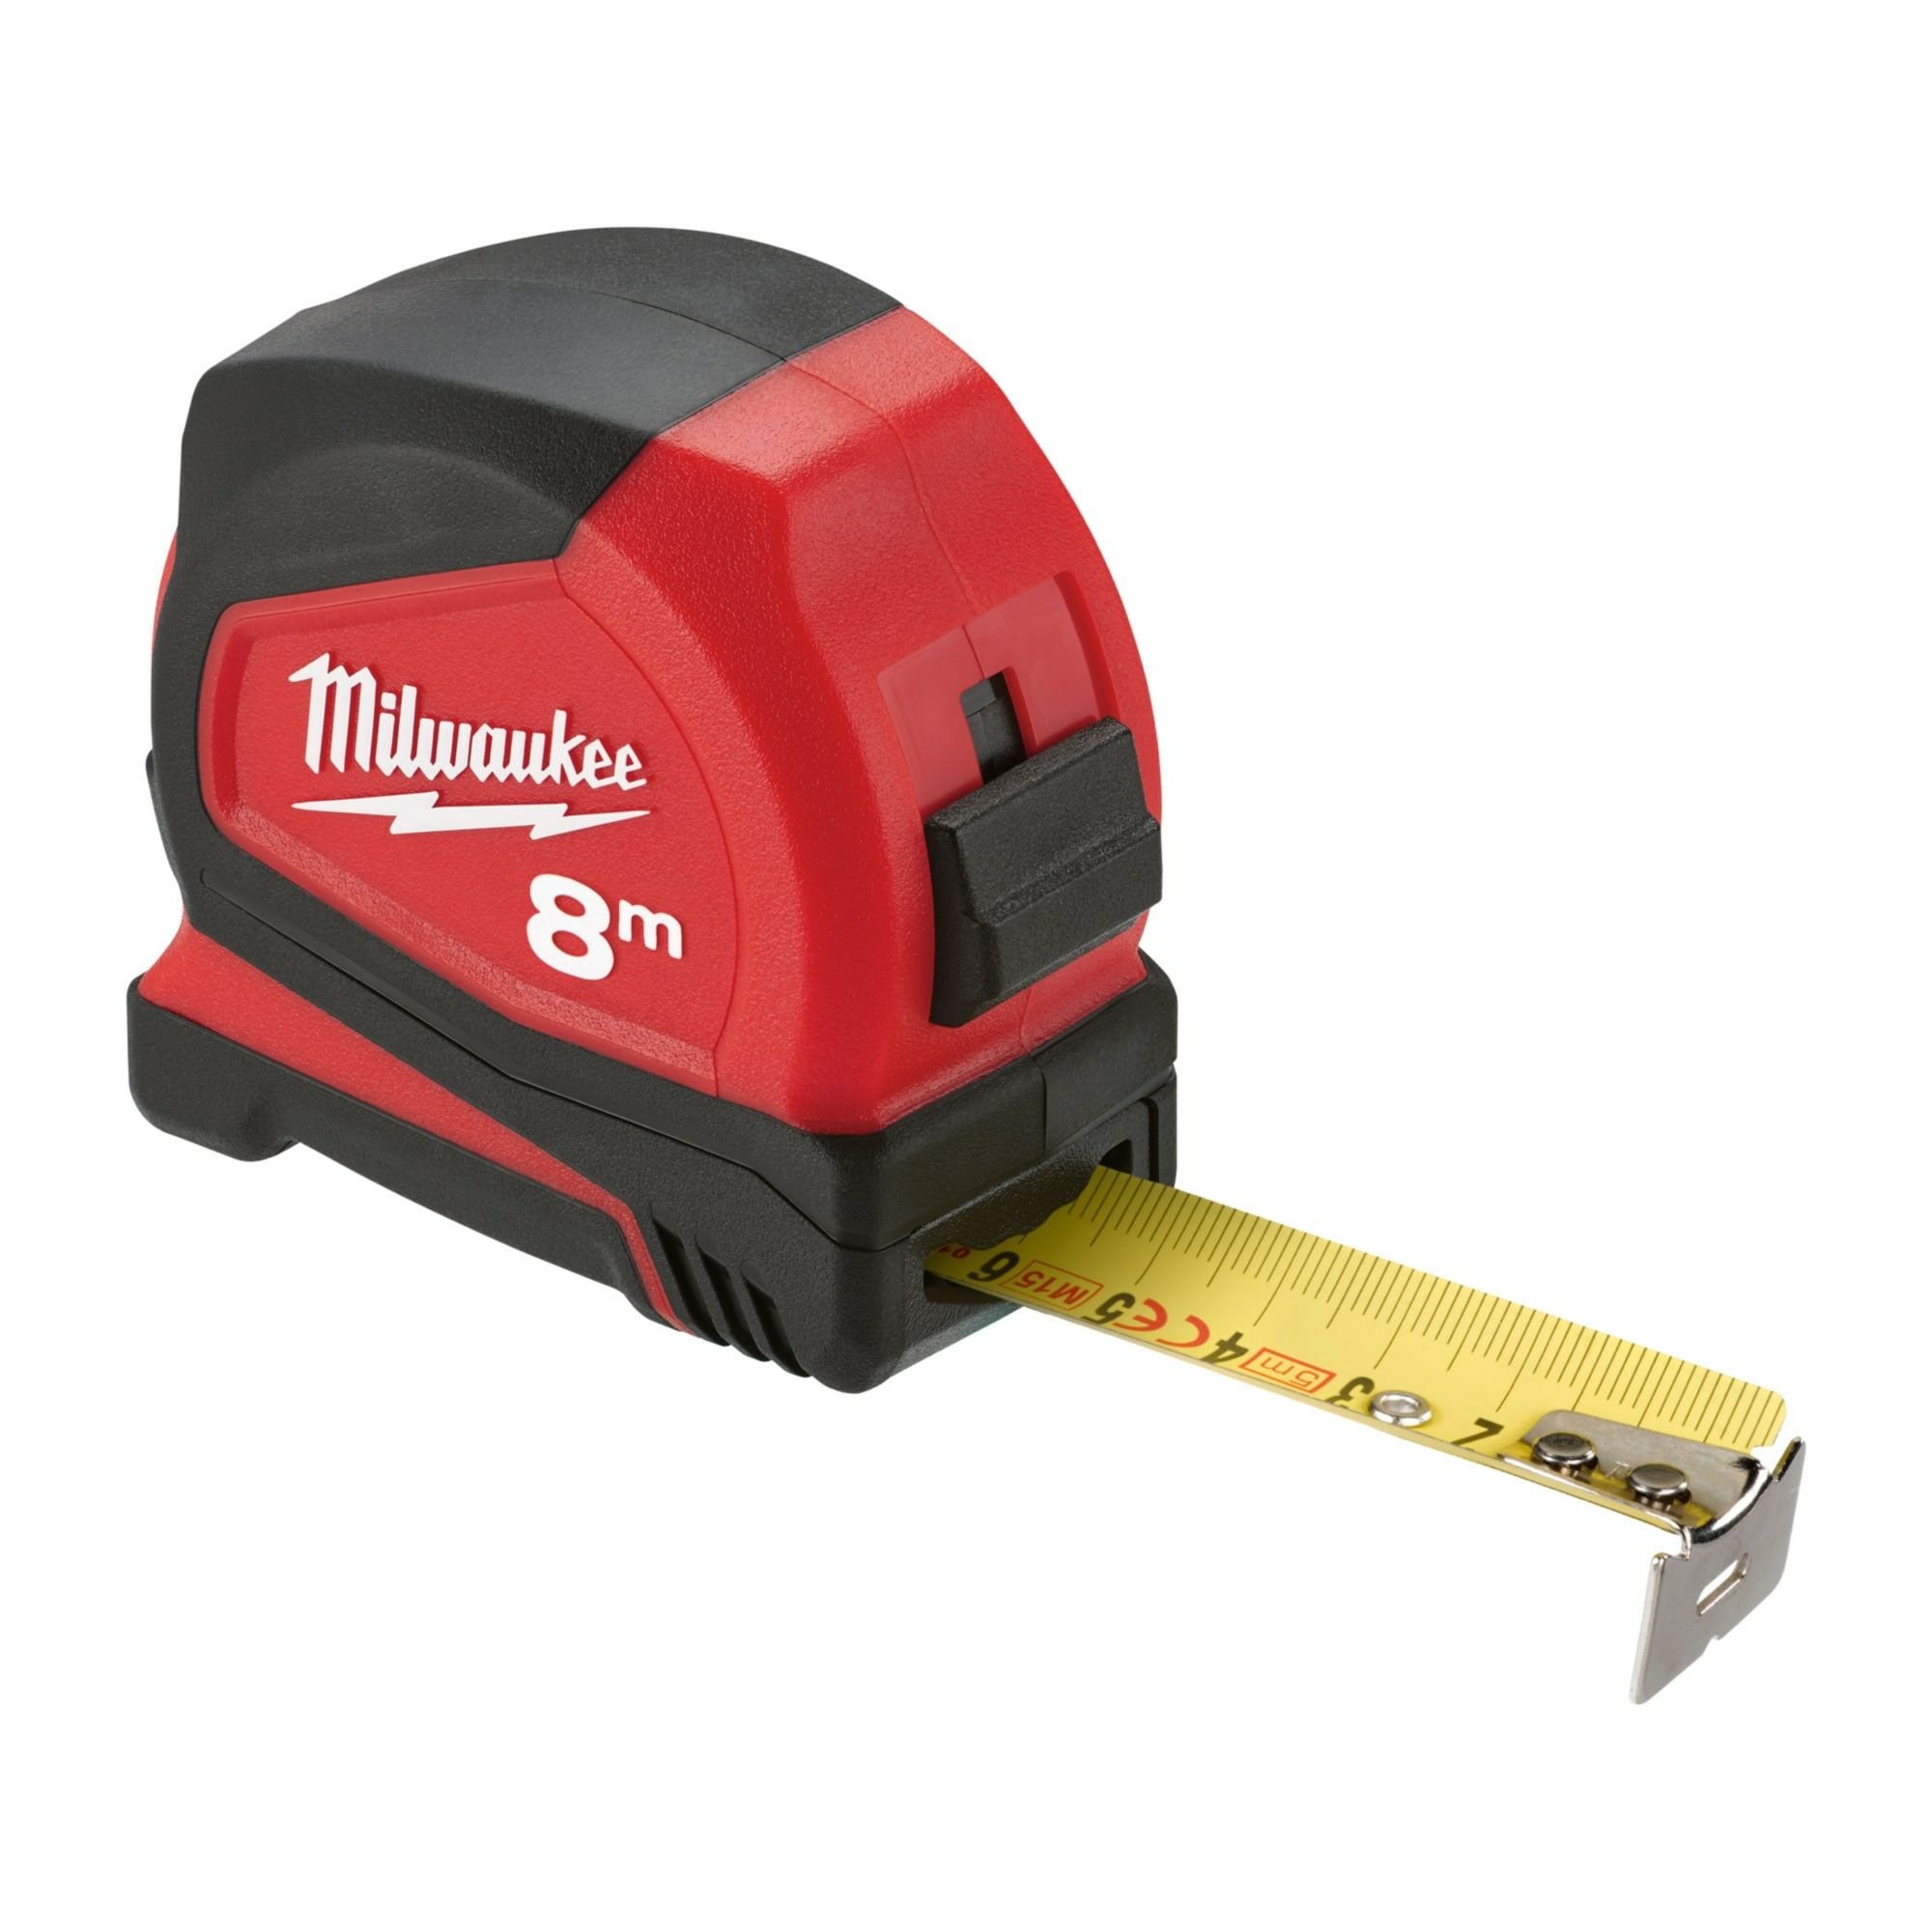 Milwaukee 4932459594 Pro Compact 8m Tape Measure